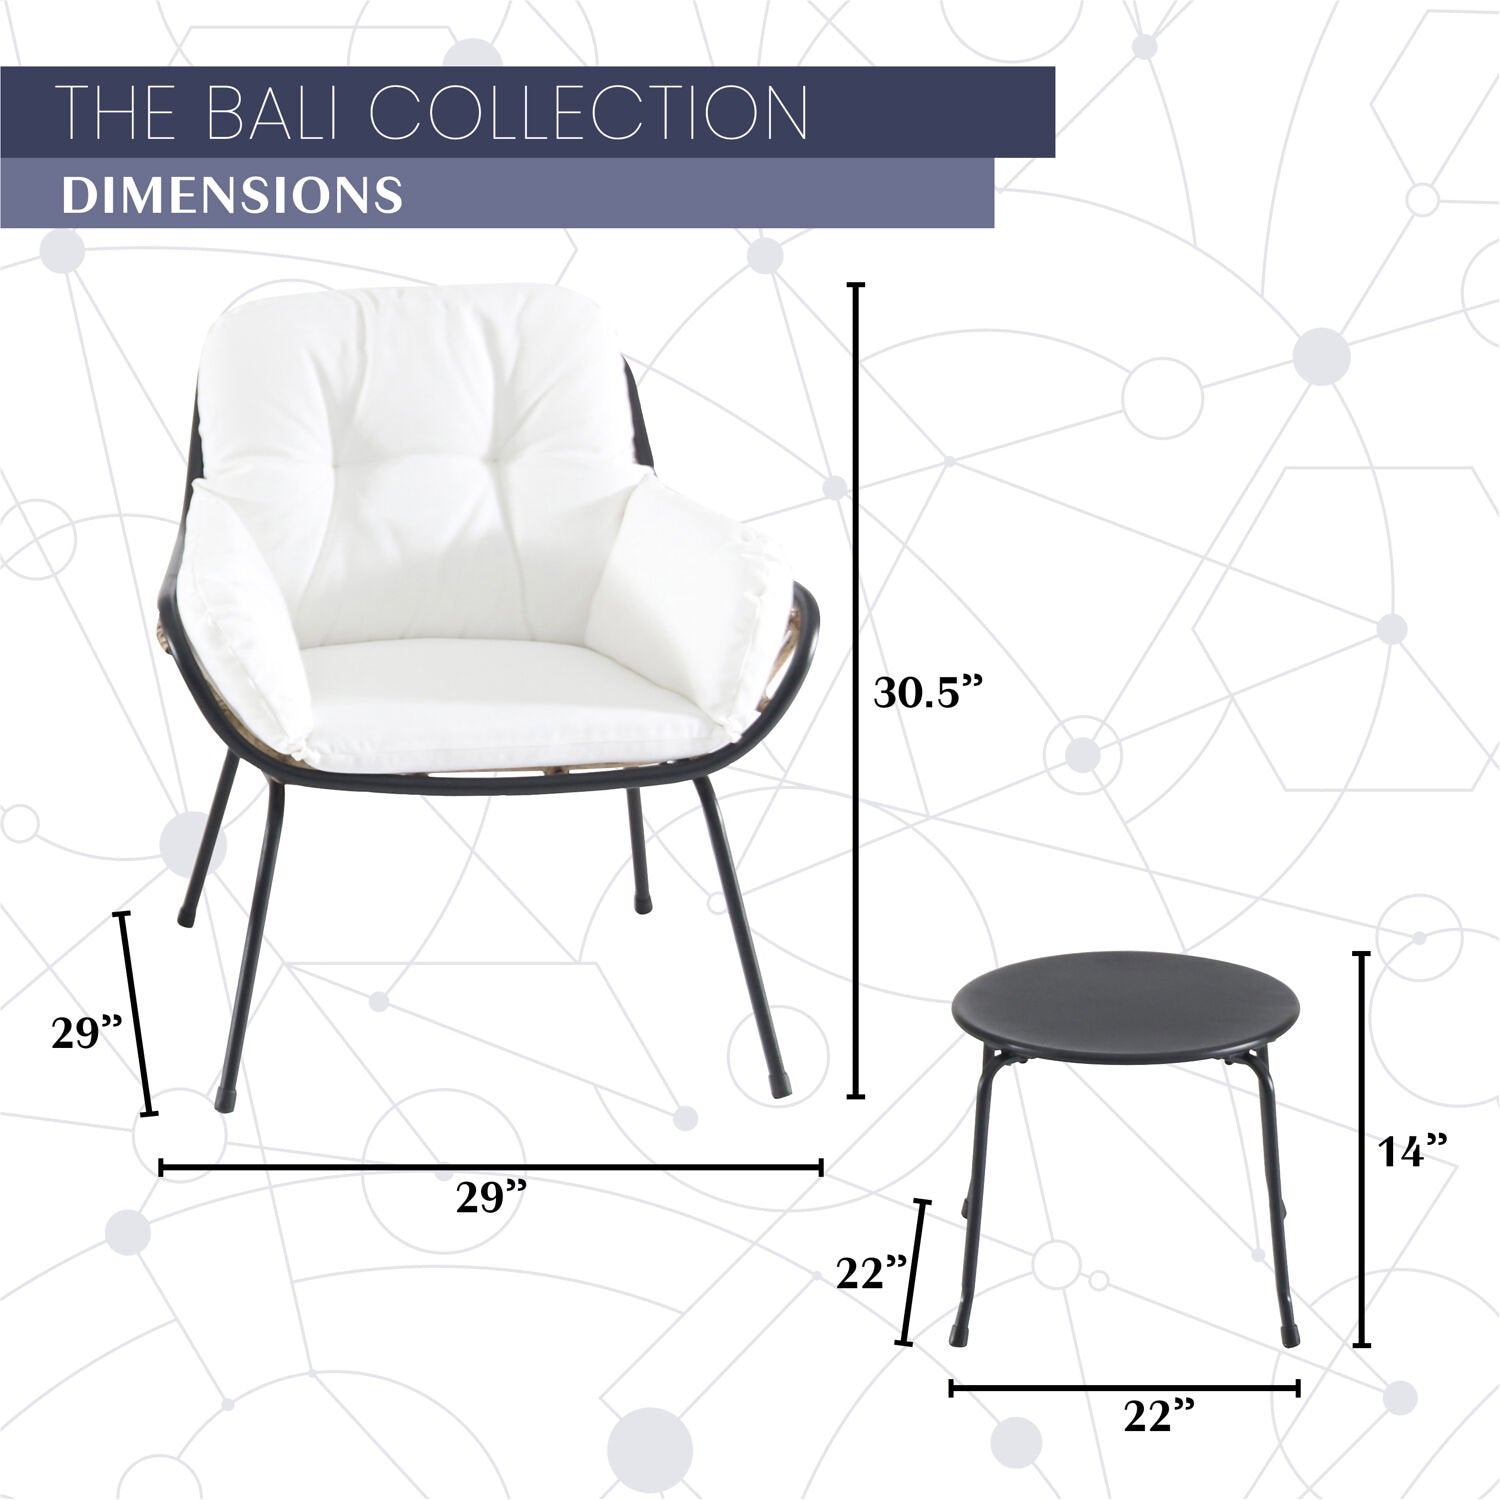 Mod Furniture - Bali 3-Piece Wicker Patio Conversation Set with White Cushions | BALI3PC-WHT